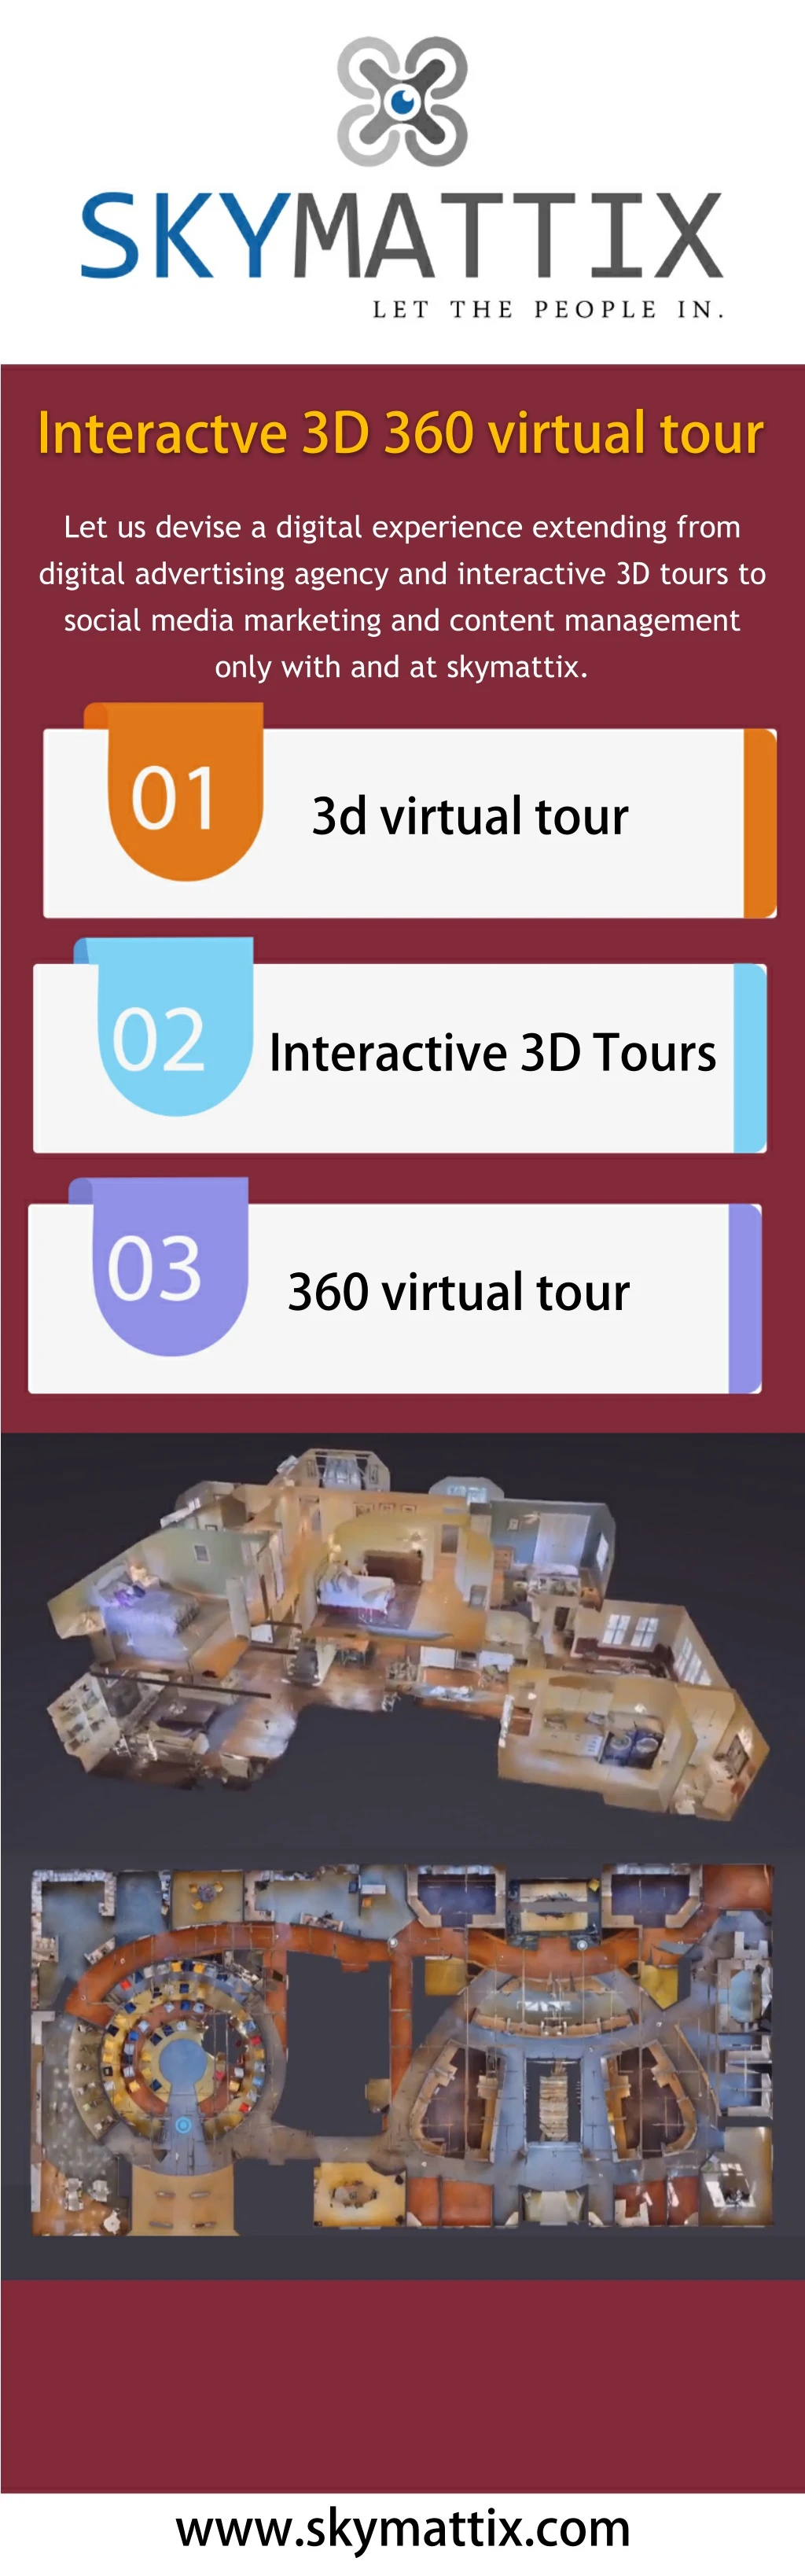 interactve 3d 360 virtual tour